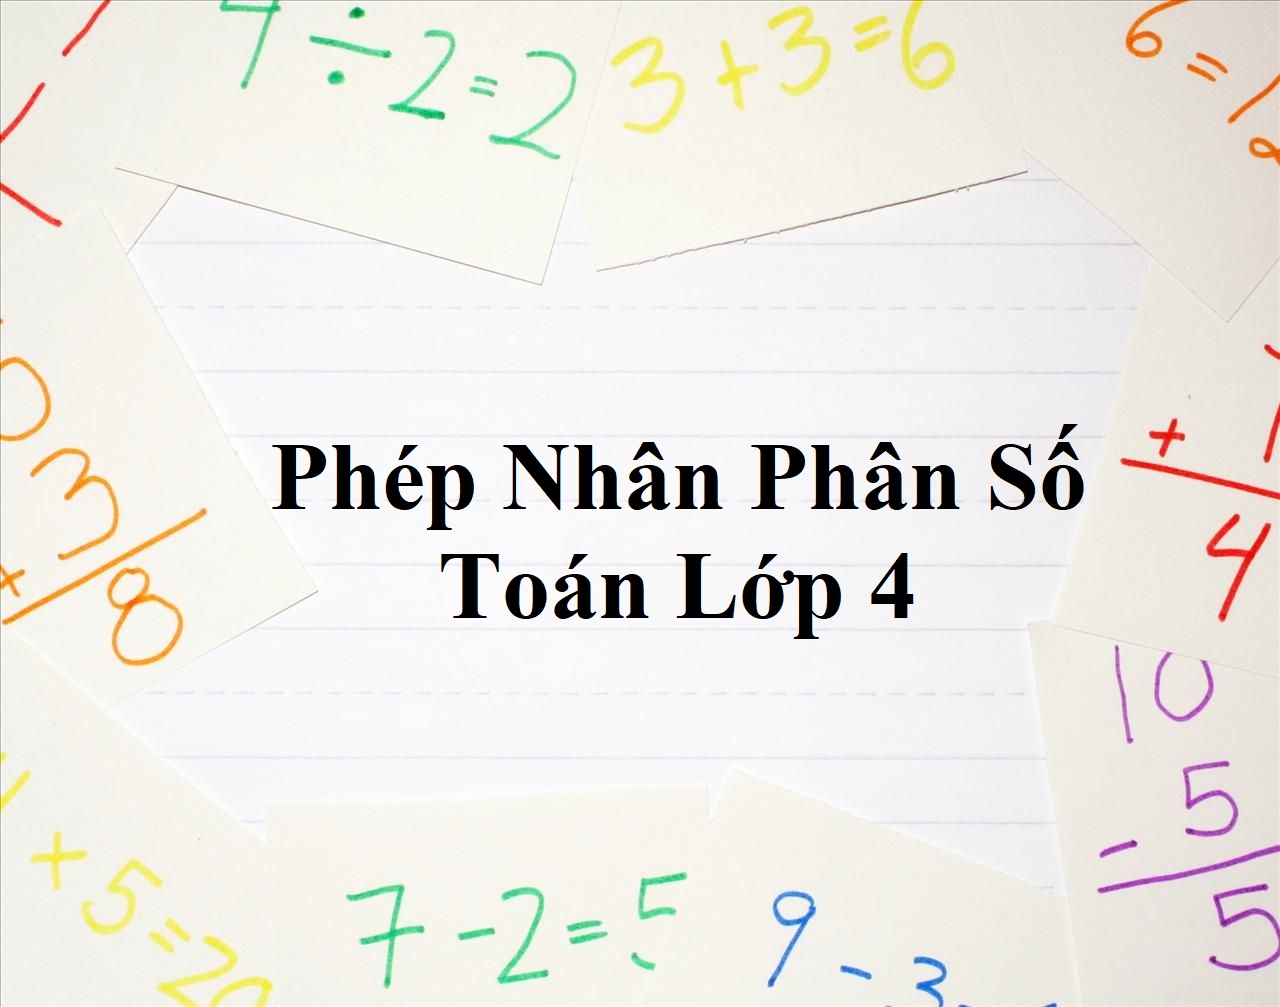 phep nhan phan so